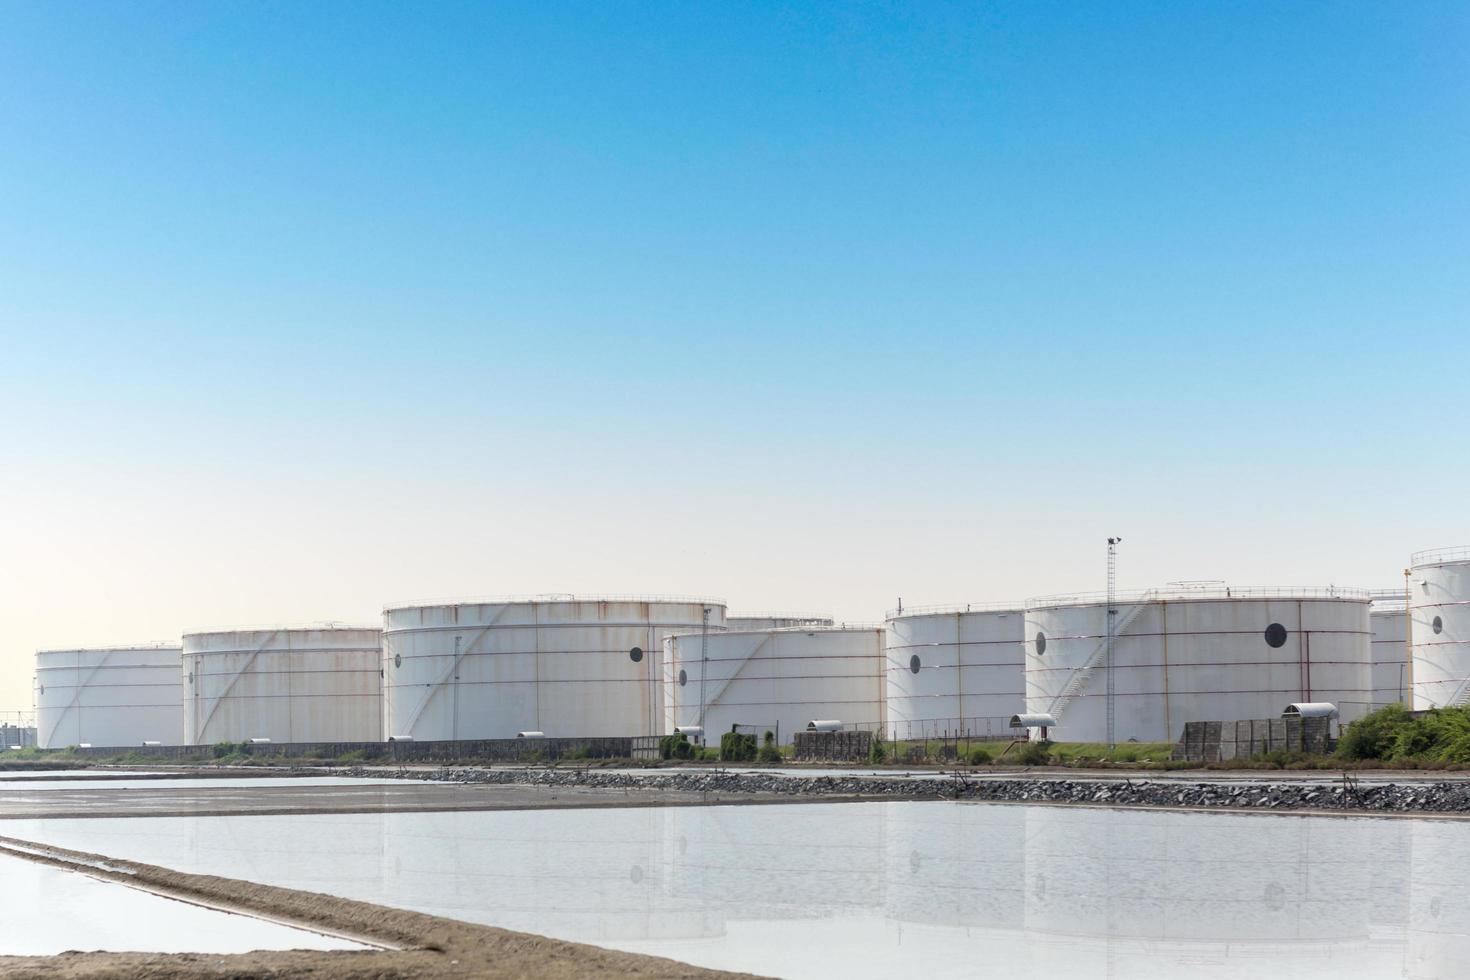 grandes tanques de aceite industrial en la terminal petrolera. foto